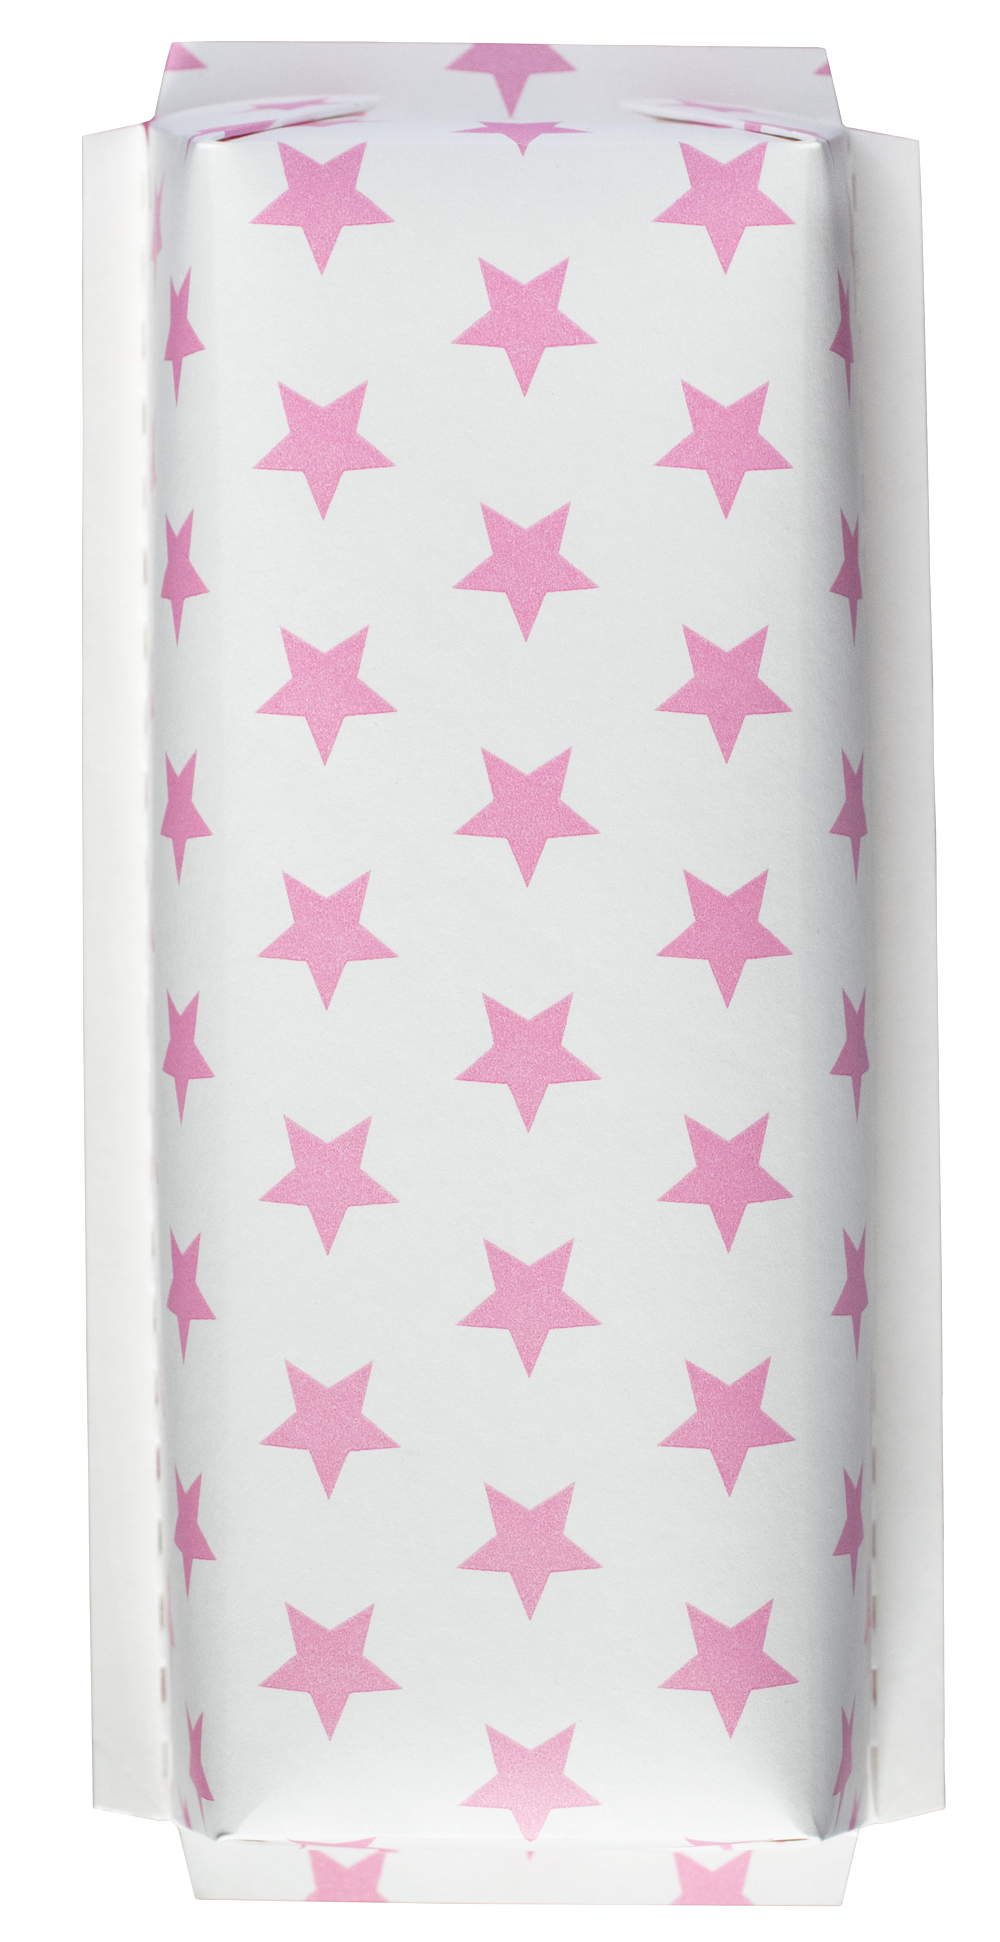 XXL-baking moulds Star rosé on white, set up •  20 x 7 x 5,5 cm